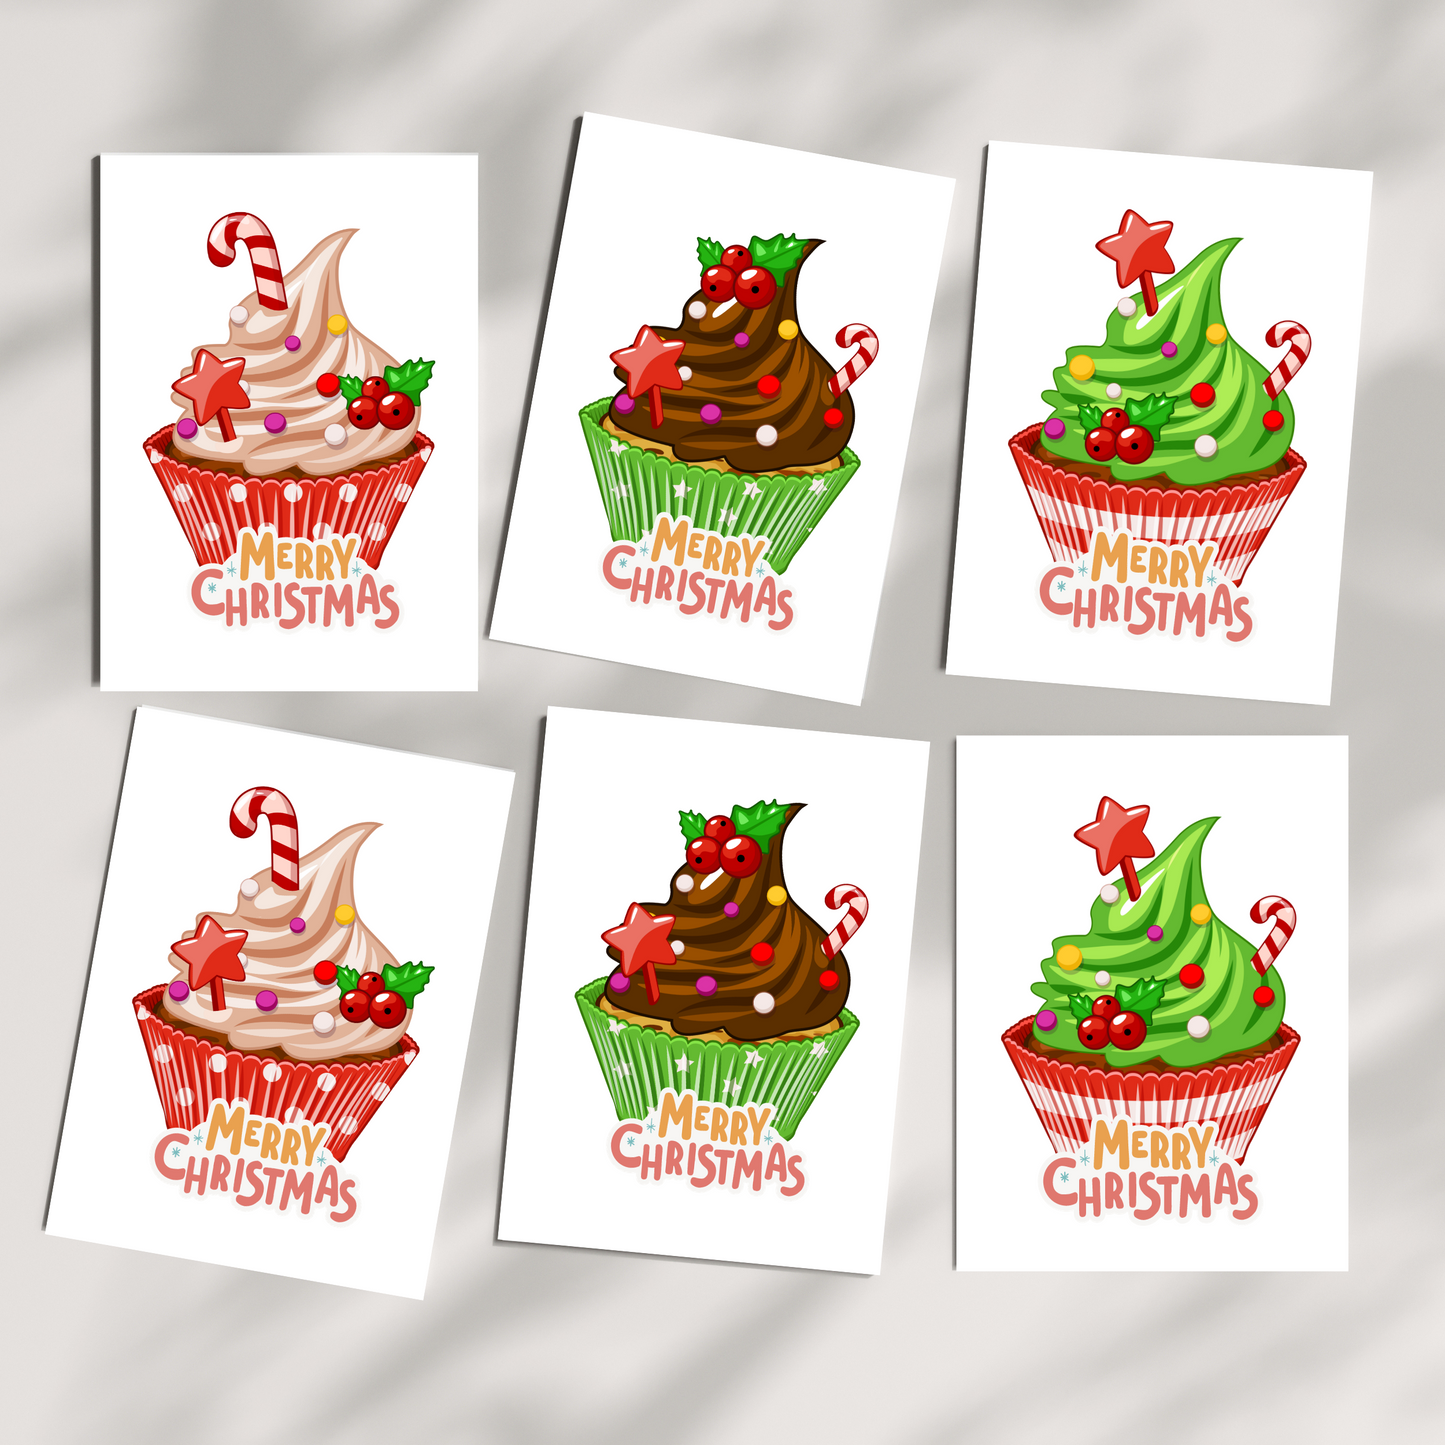 Cupcake Christmas cards - set of 6 cards